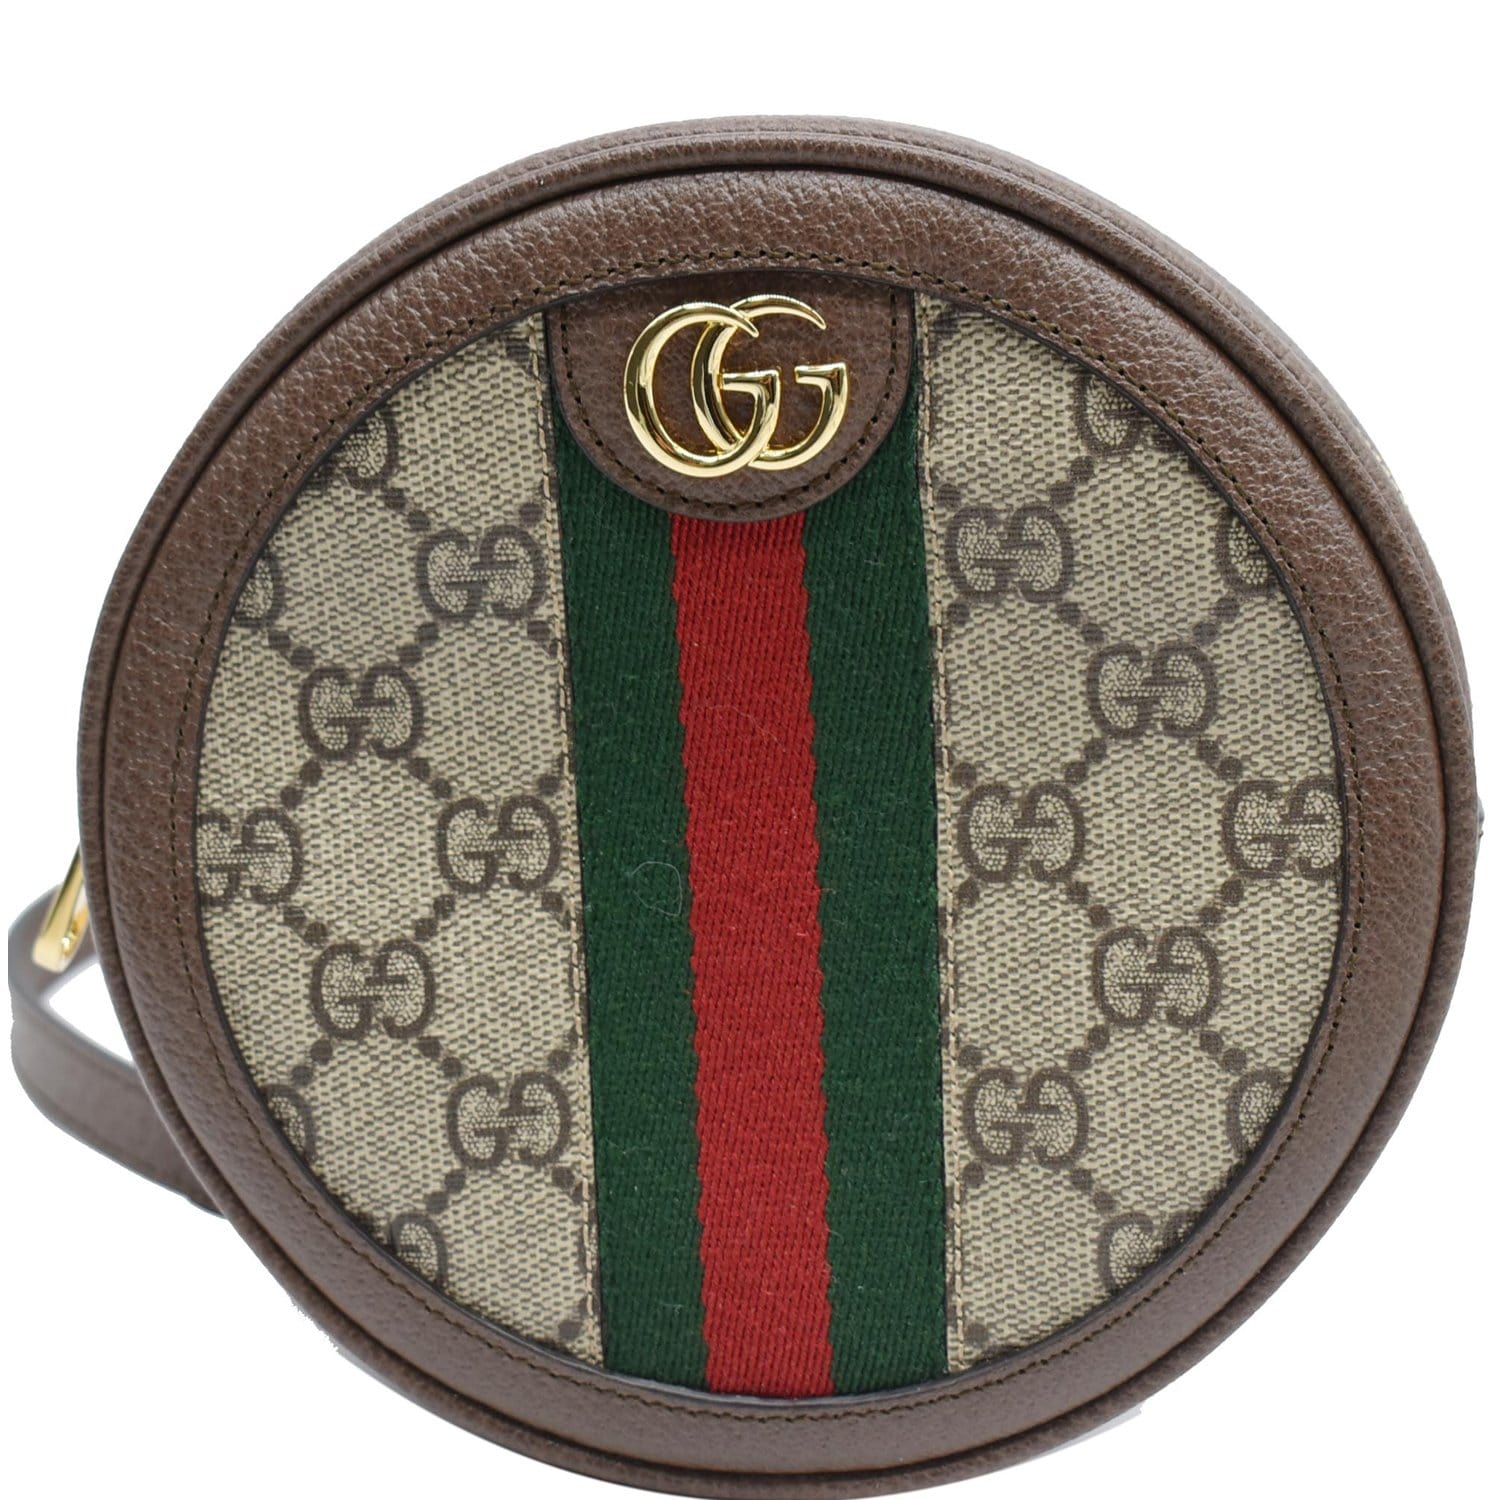 Gucci Ophidia GG Mini Shoulder Bag - Farfetch